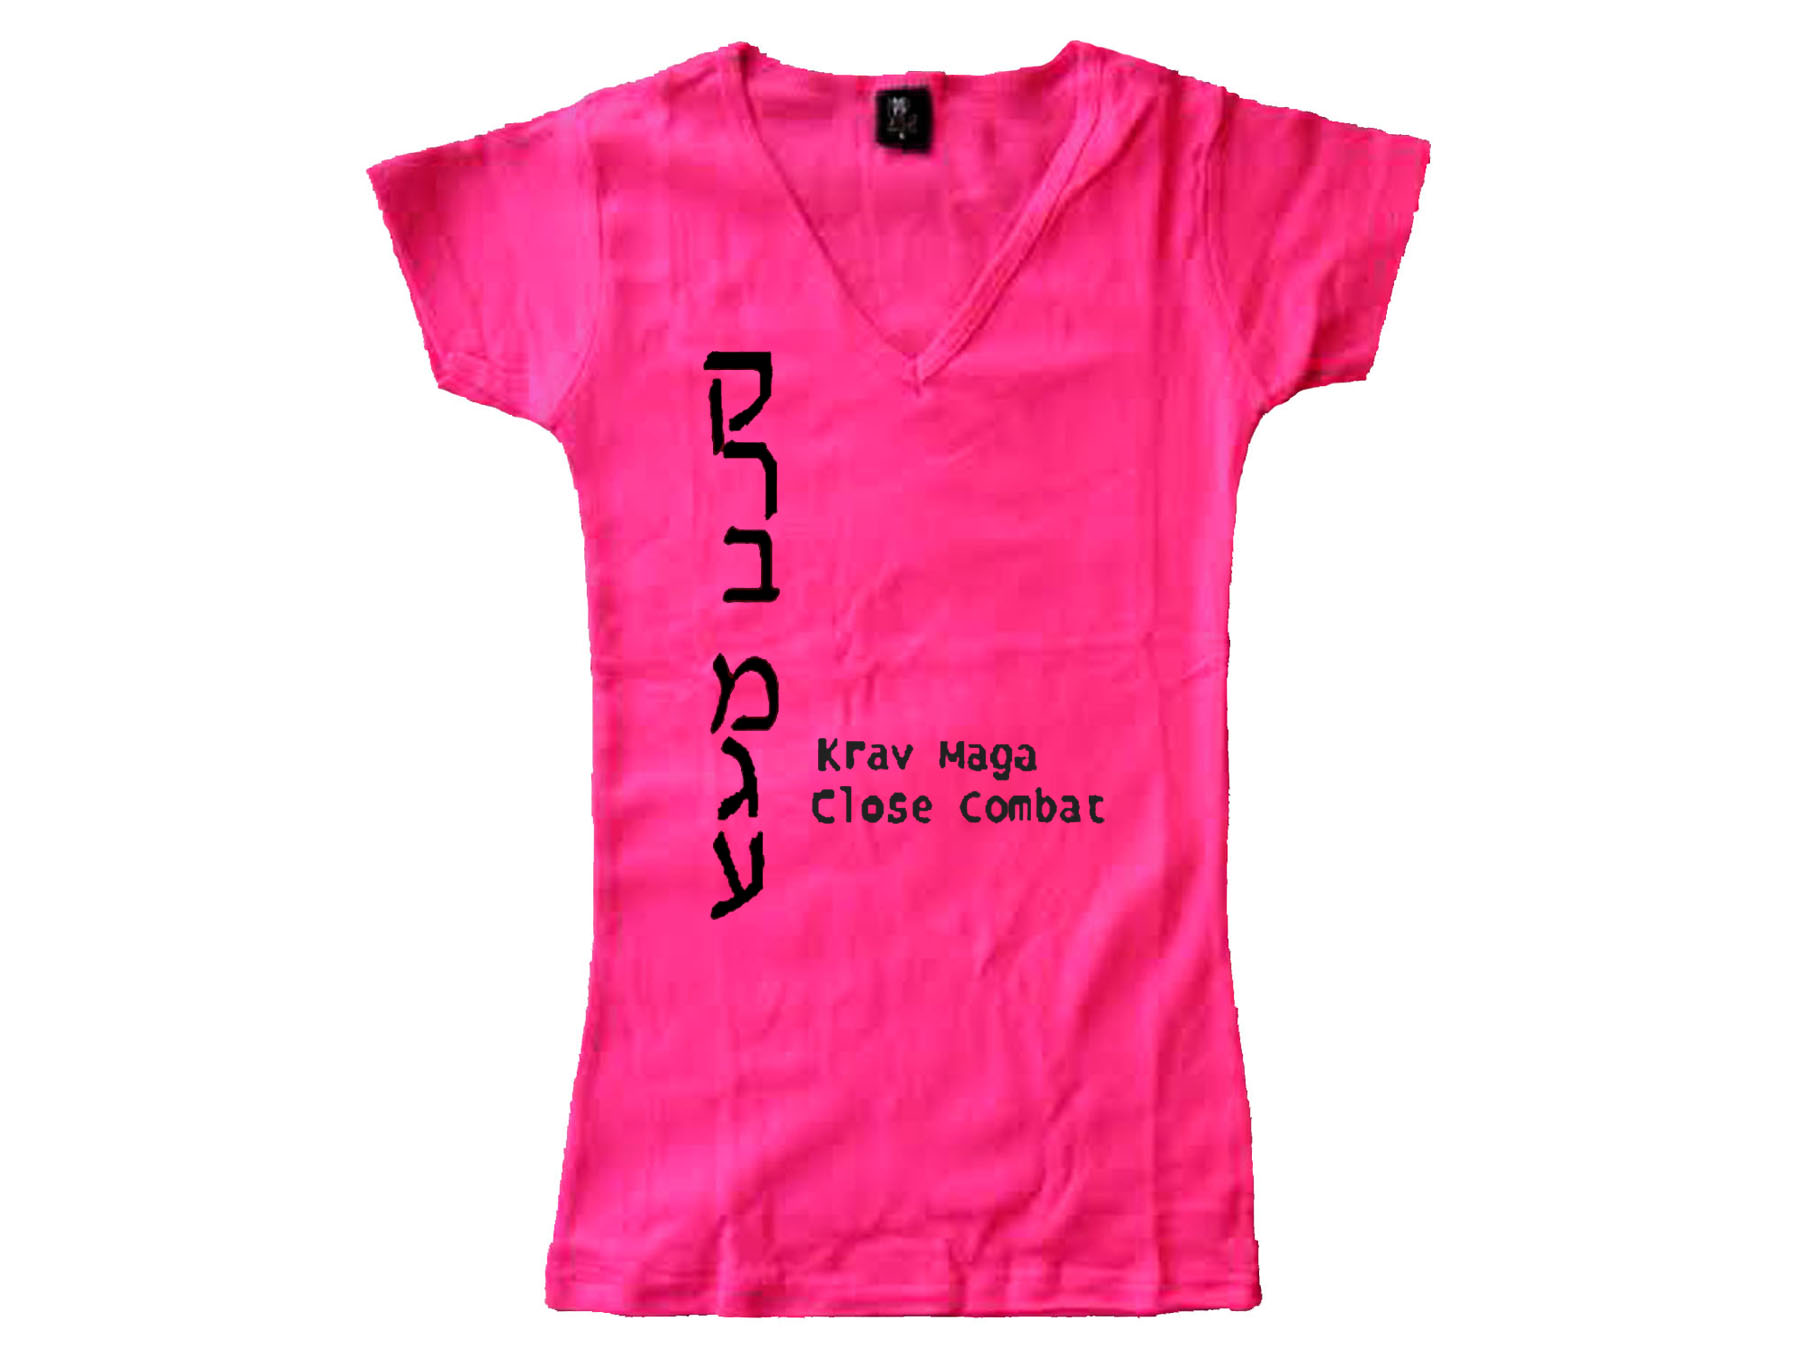 Krav Maga English/Hebrew V Neck Fitted pink t-shirt b